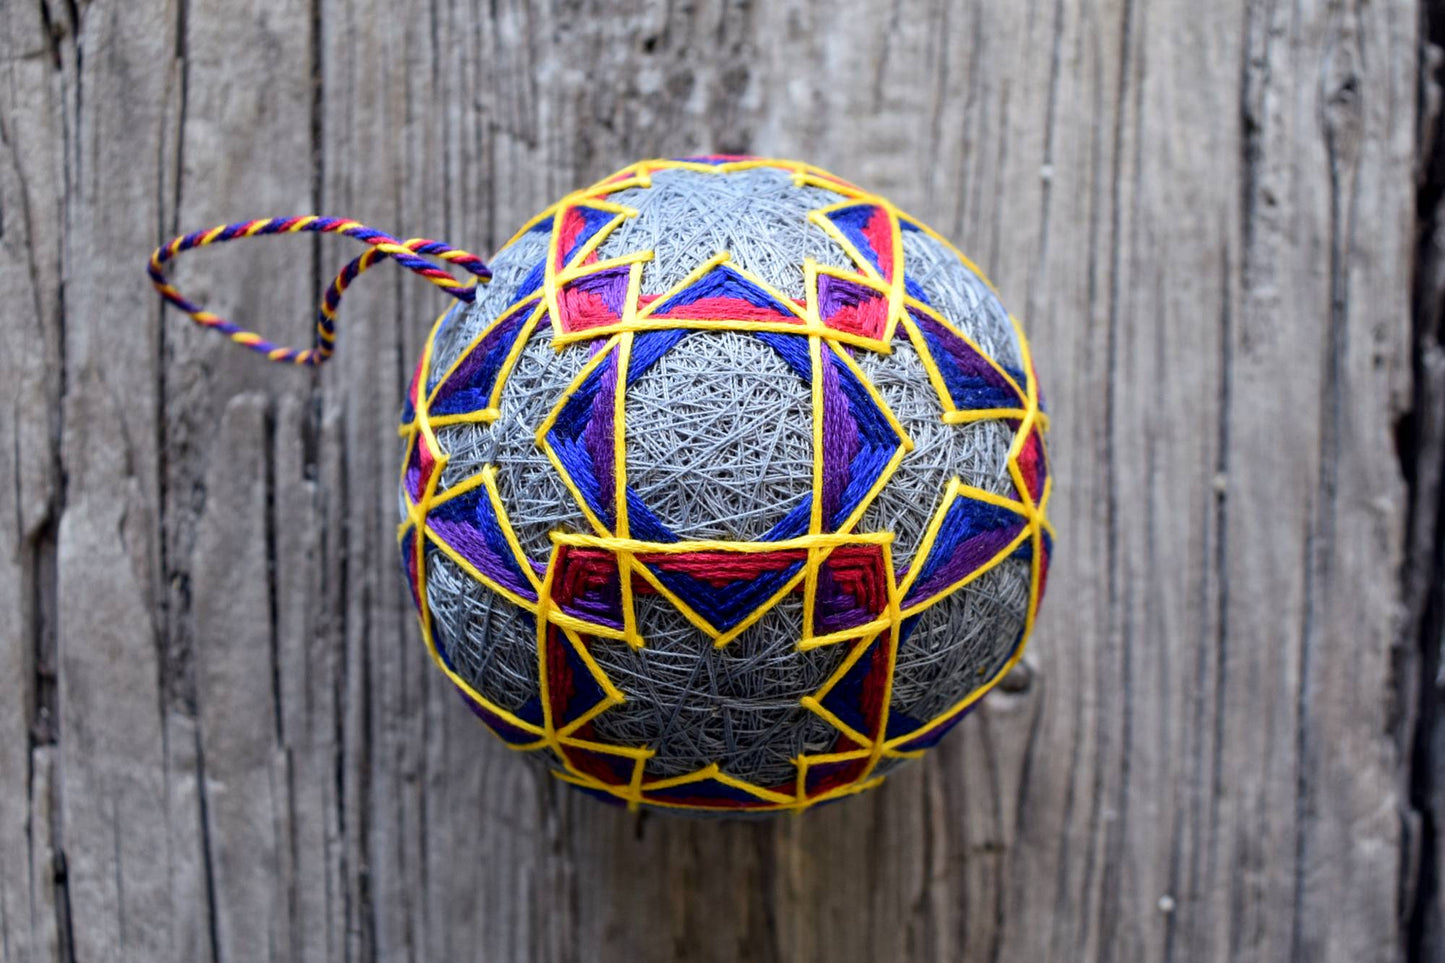 Japanese temari ball top down showing interlocking diamonds and triangles in jewel tones